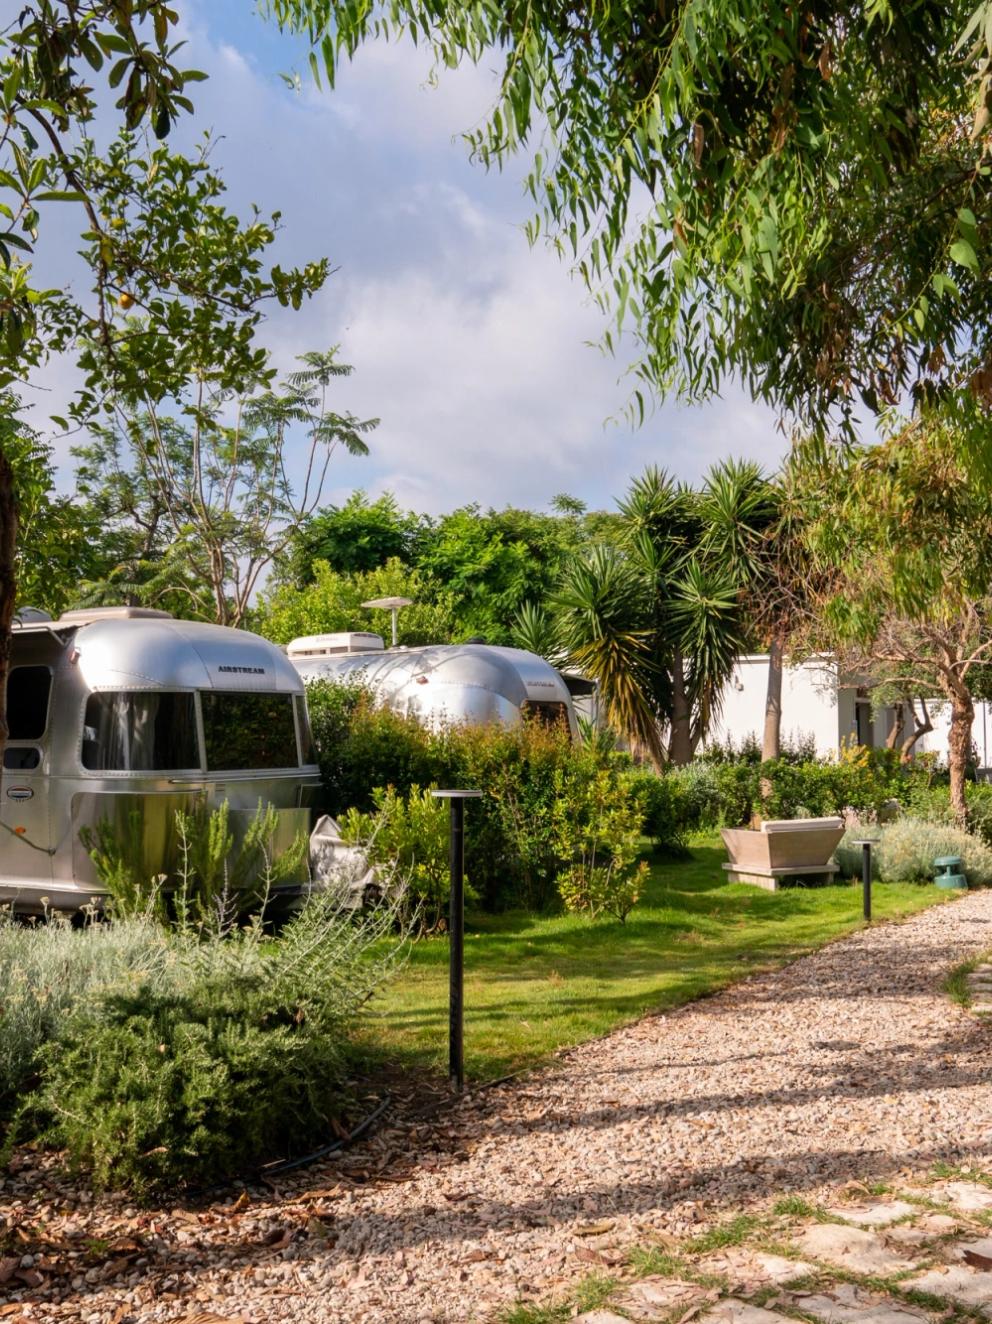 Airstream - Procida Camp & Resort